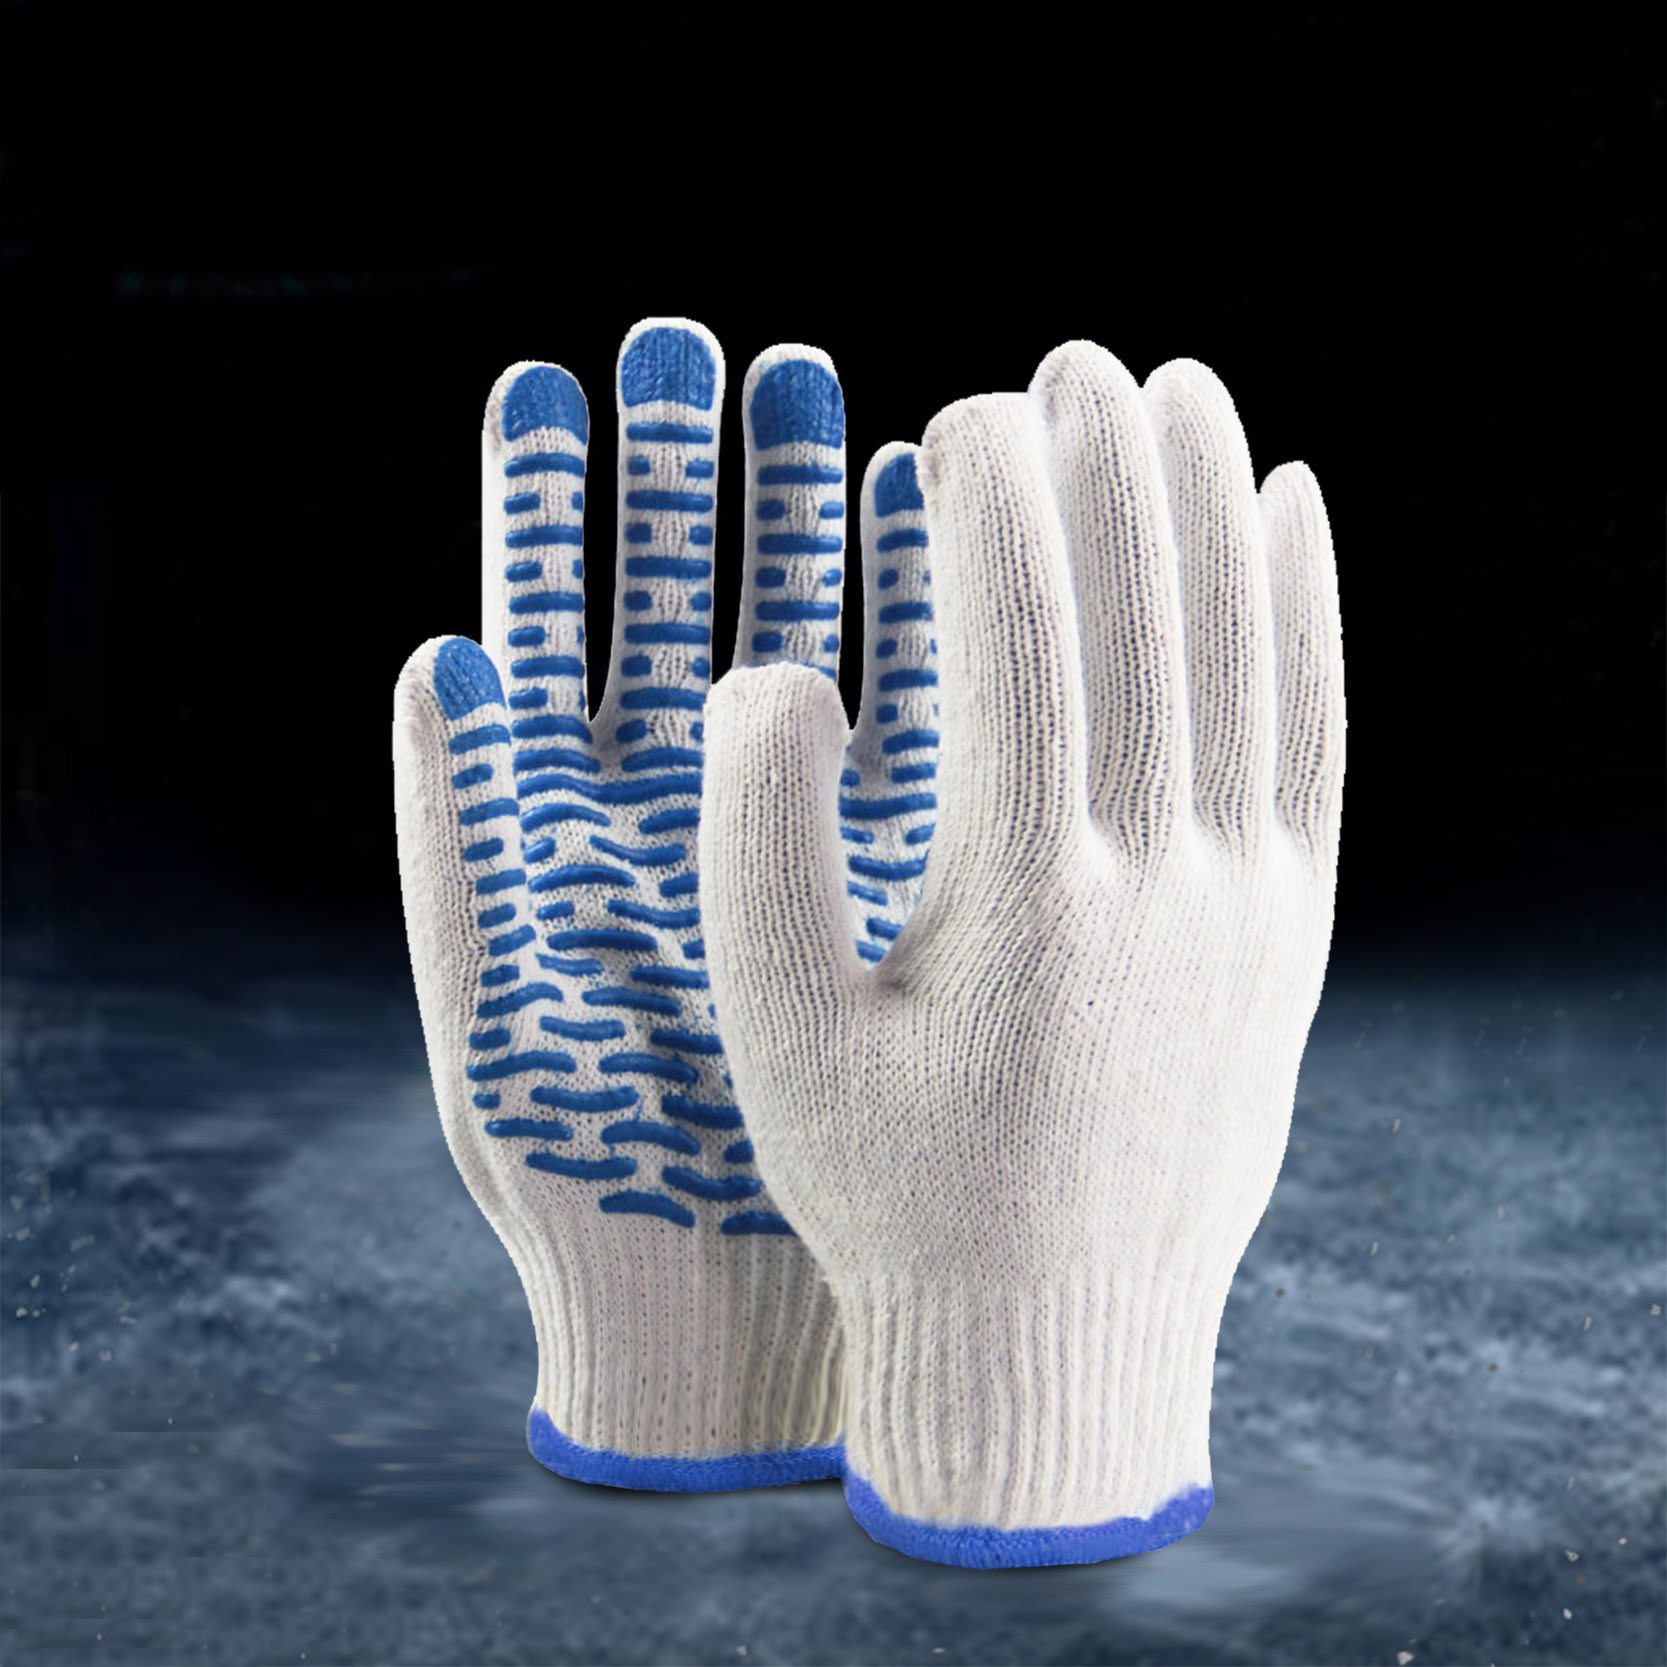 Pvc Dotted Natural White Cotton Glove Cotton String Knit Glove (၁)ခု၊